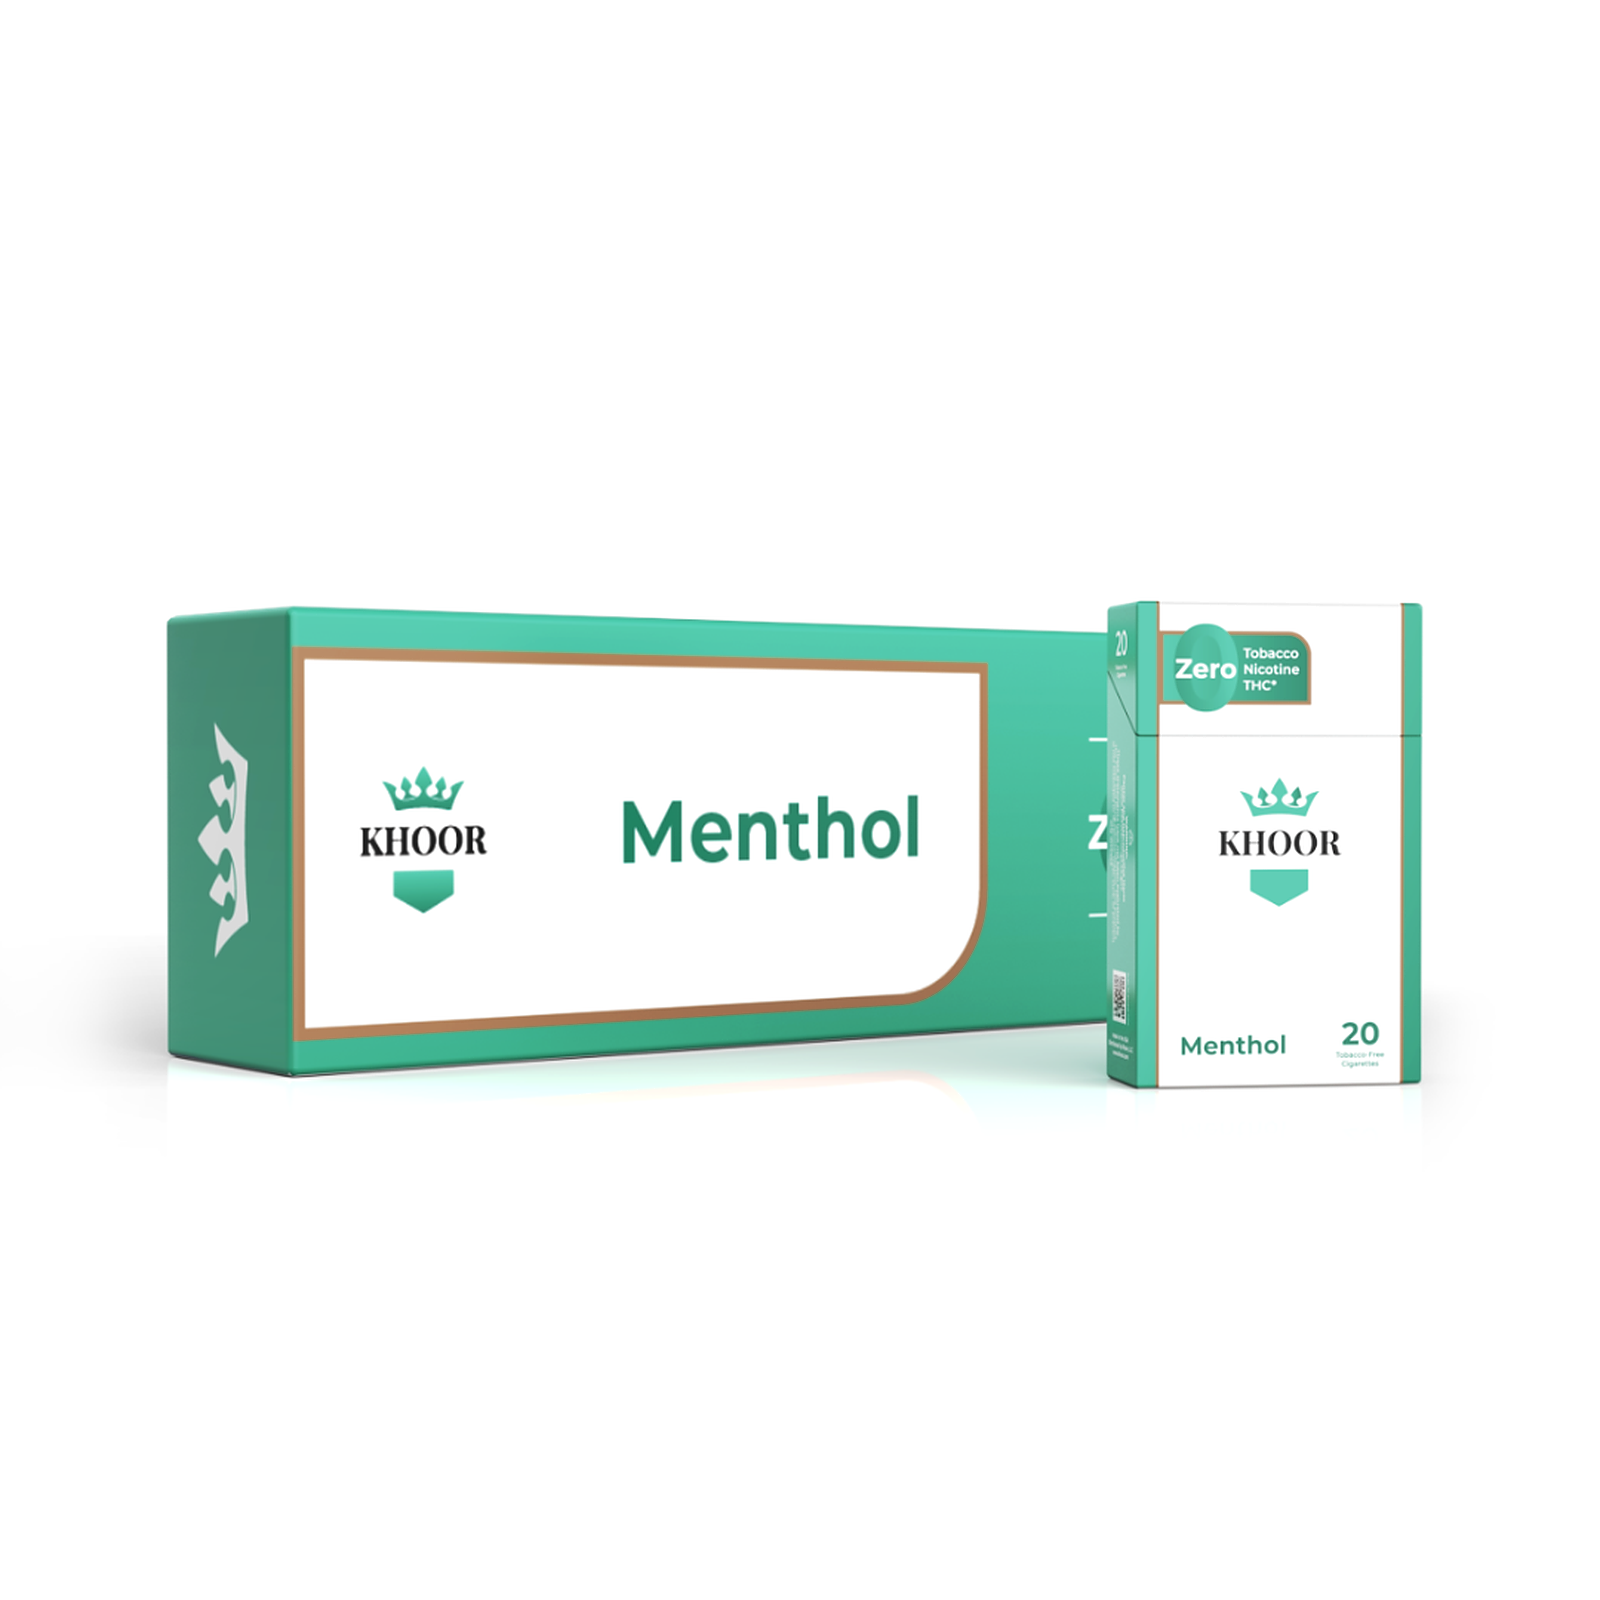 Khoor Menthol Carton (10 packs)